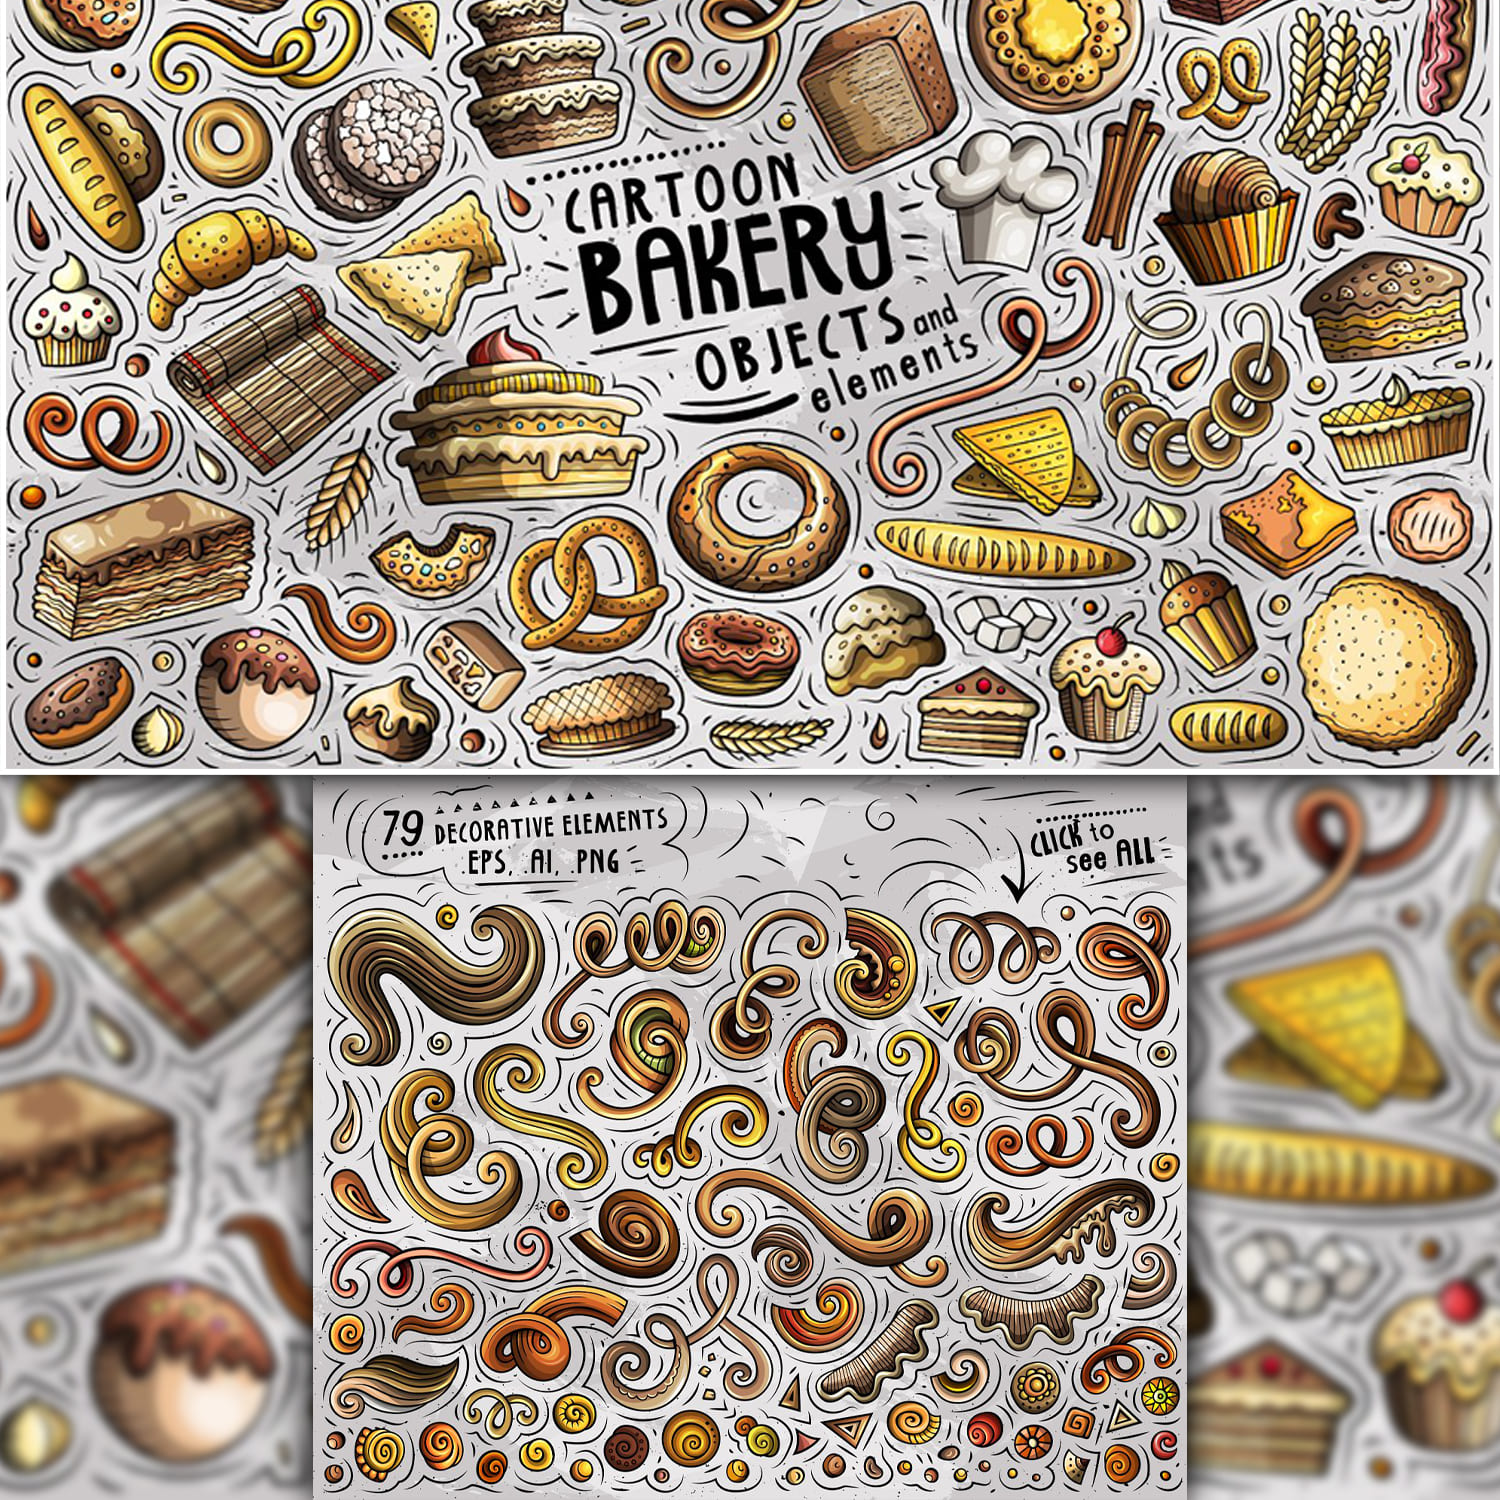 Bakery Products Cartoon Objects Set 1500 1500 2.